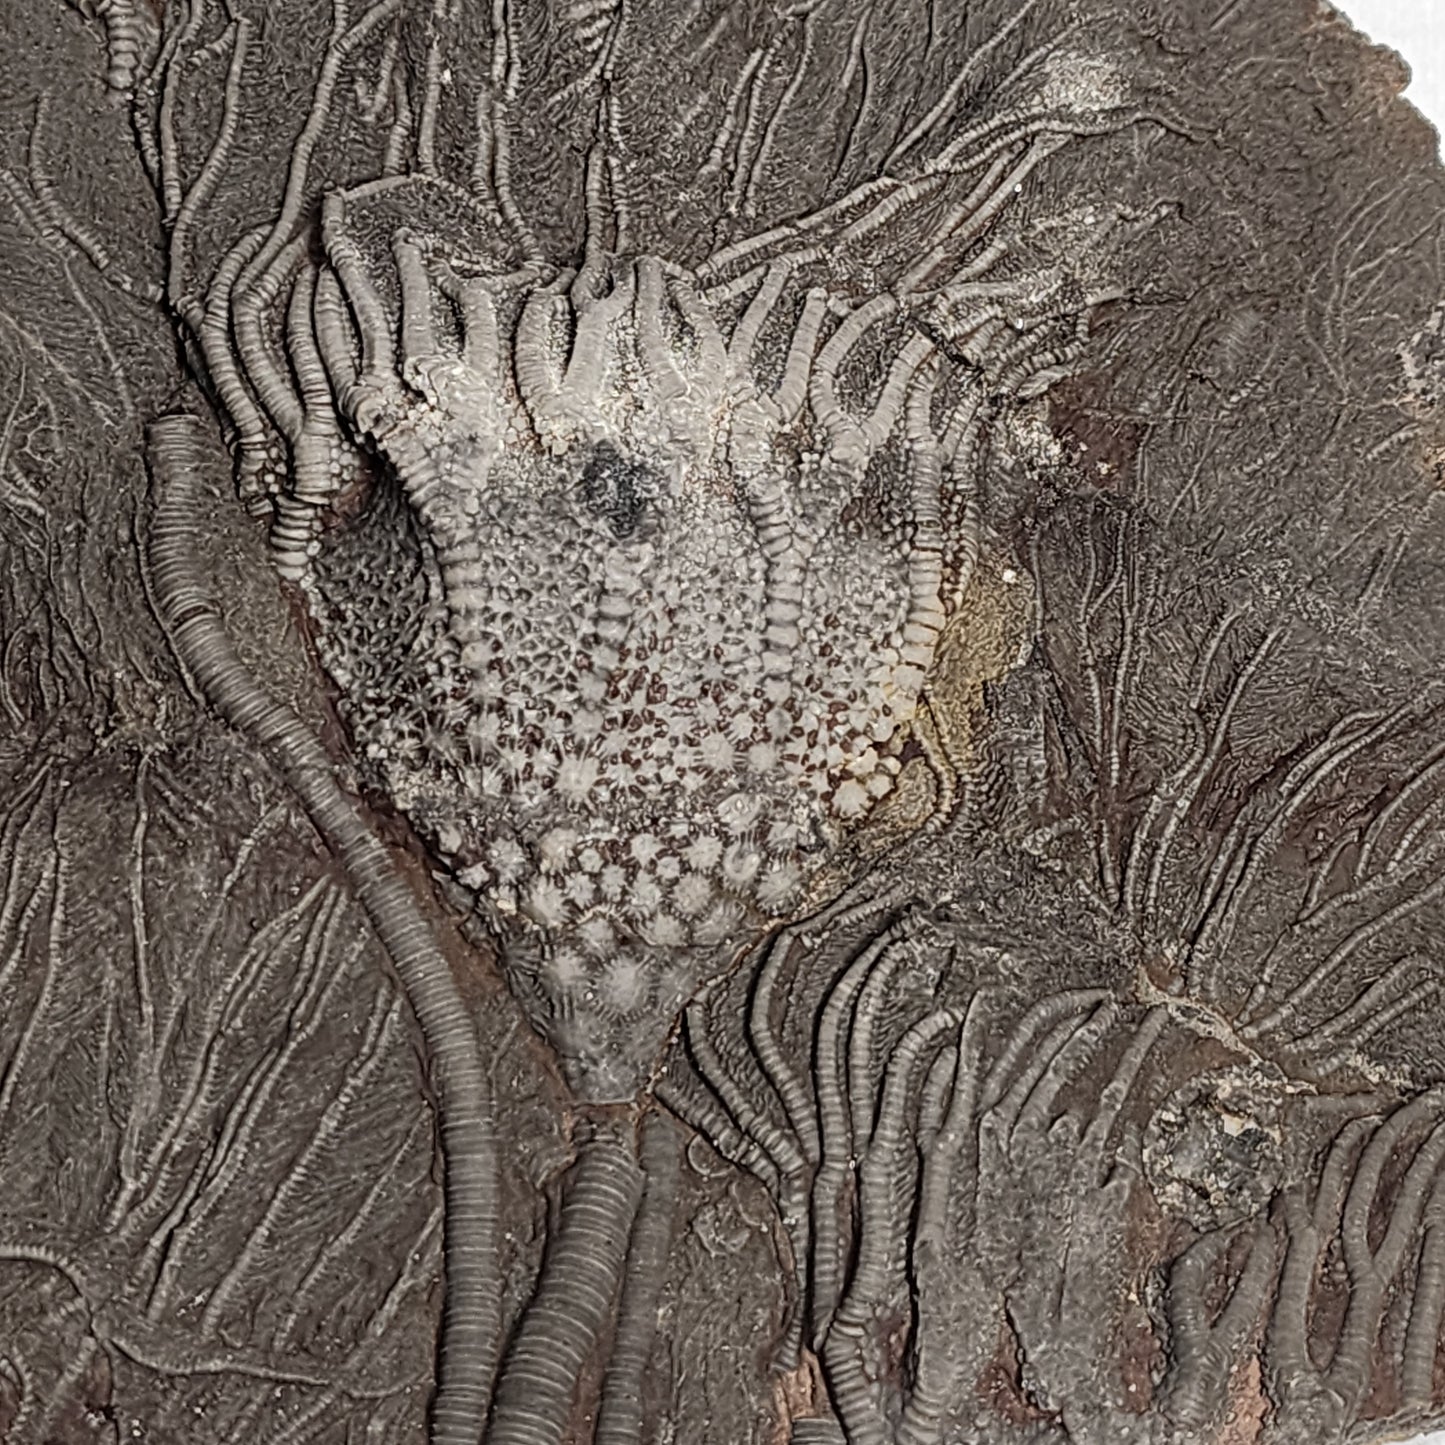 Stunning "Sea Lilly" Crinoid Plate